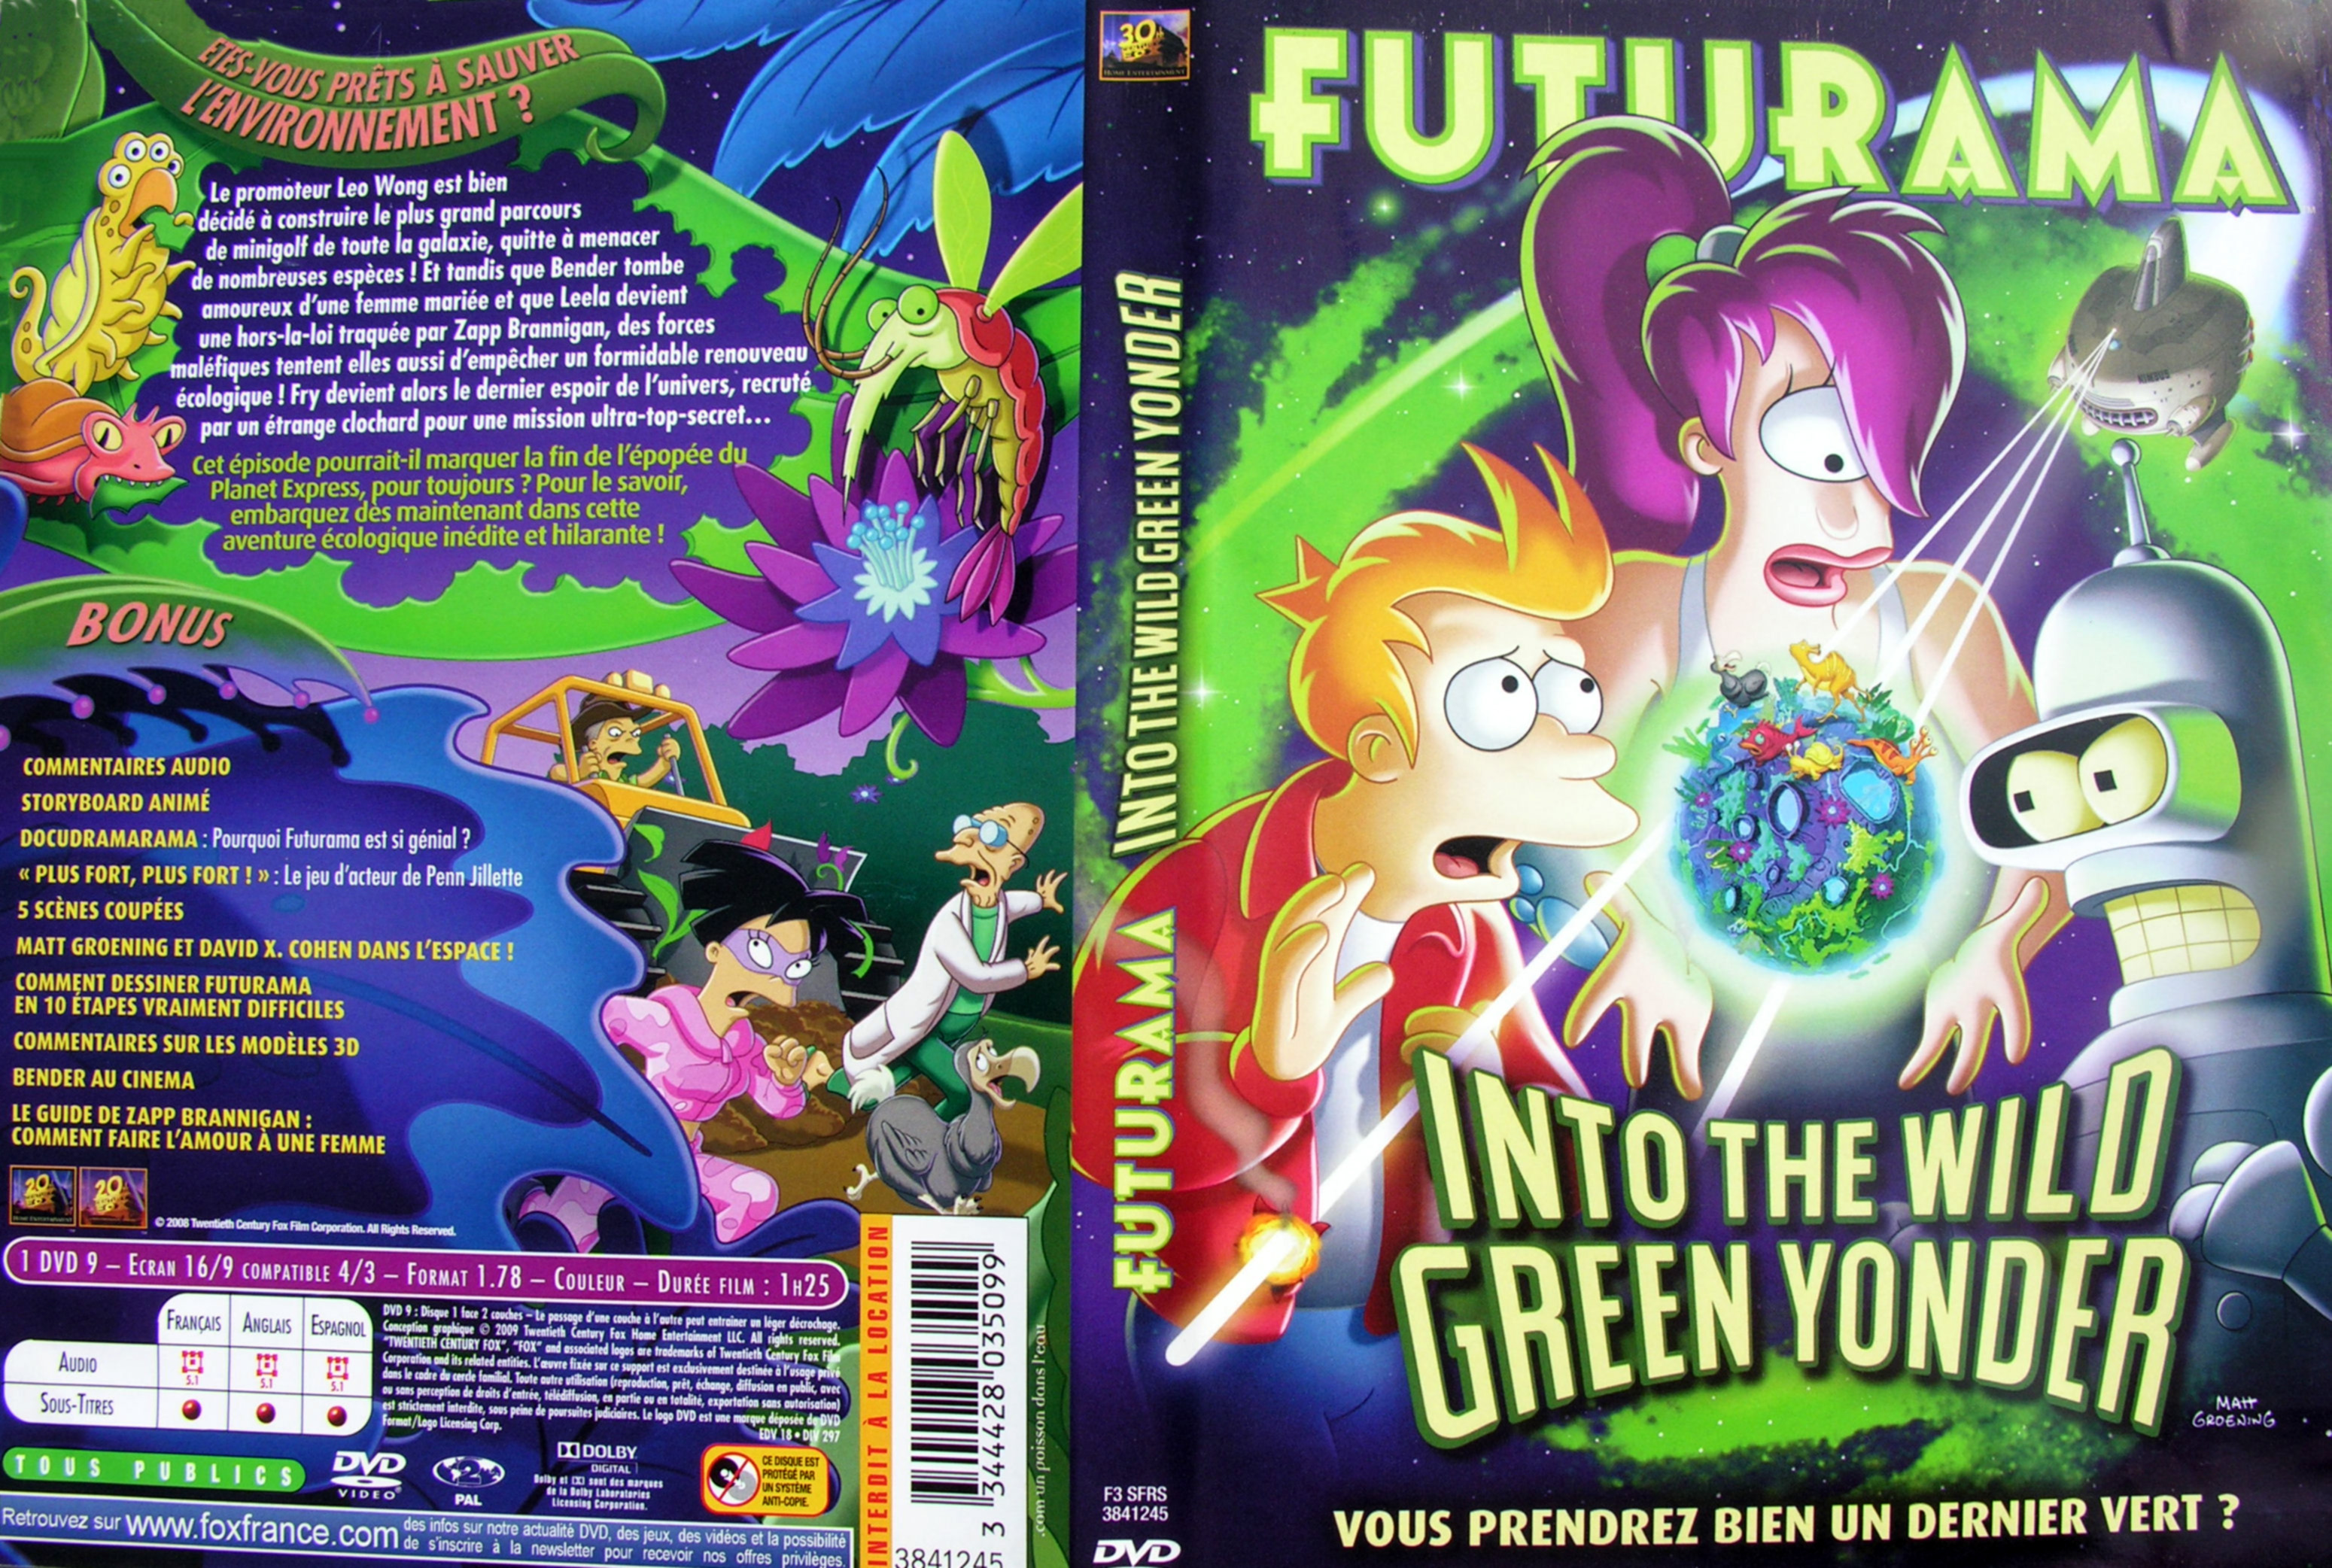 Jaquette DVD Futurama into the wild green yonder